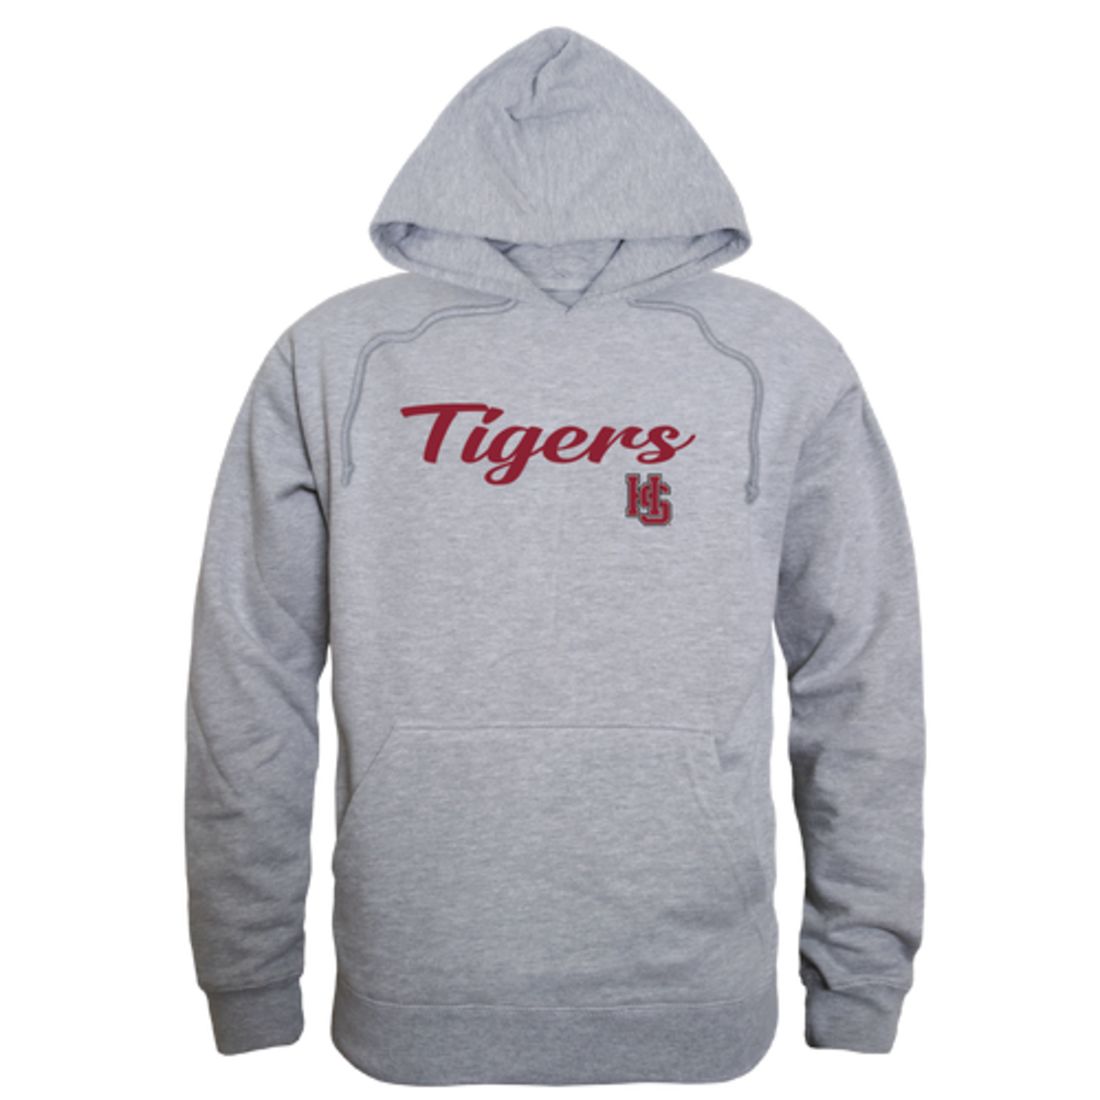 HSC Hampden-Sydney College Tigers Mens Script Hoodie Sweatshirt Black-Campus-Wardrobe